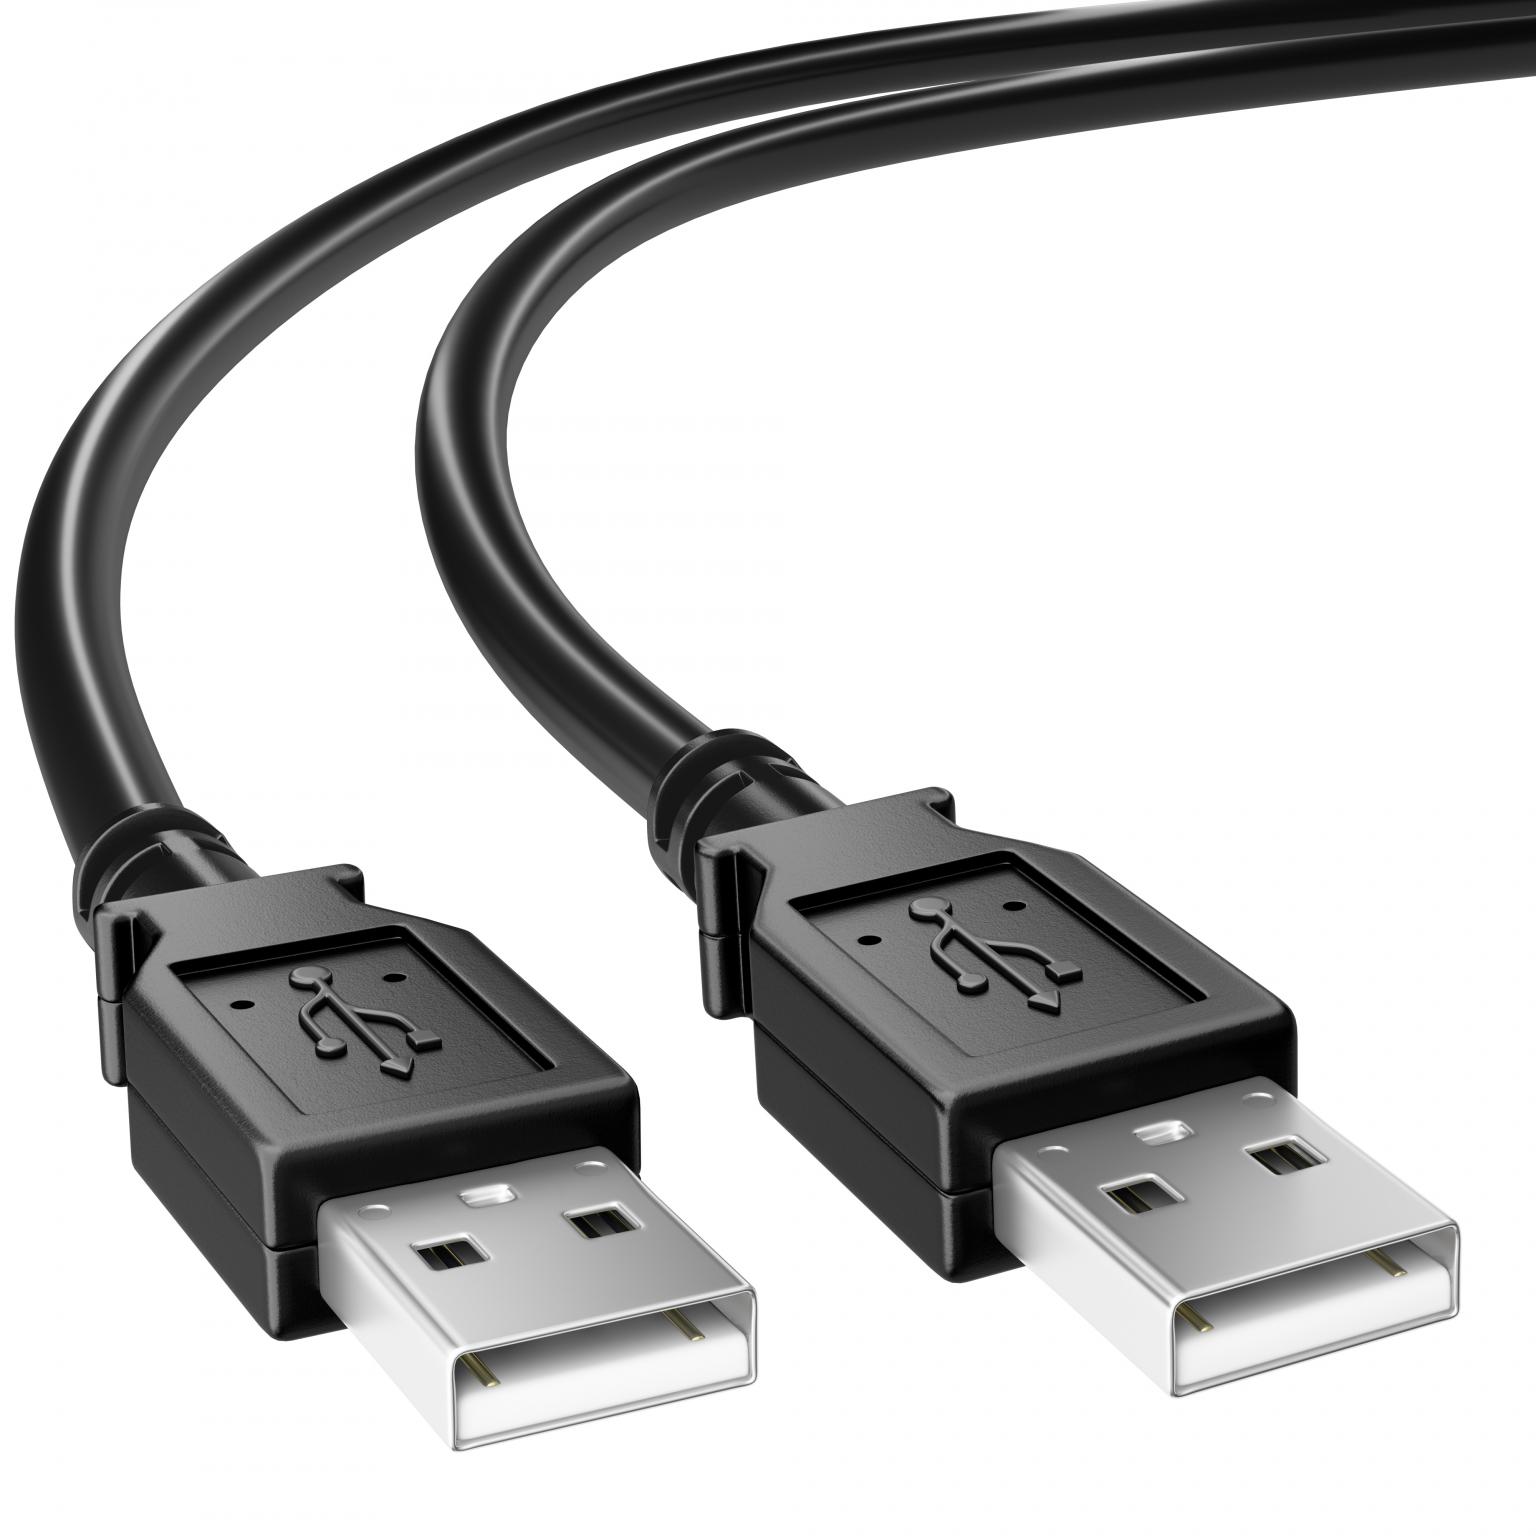 Câble USB 2.0 - Câble USB 2.0, Connecteur 1 : USB A mâle